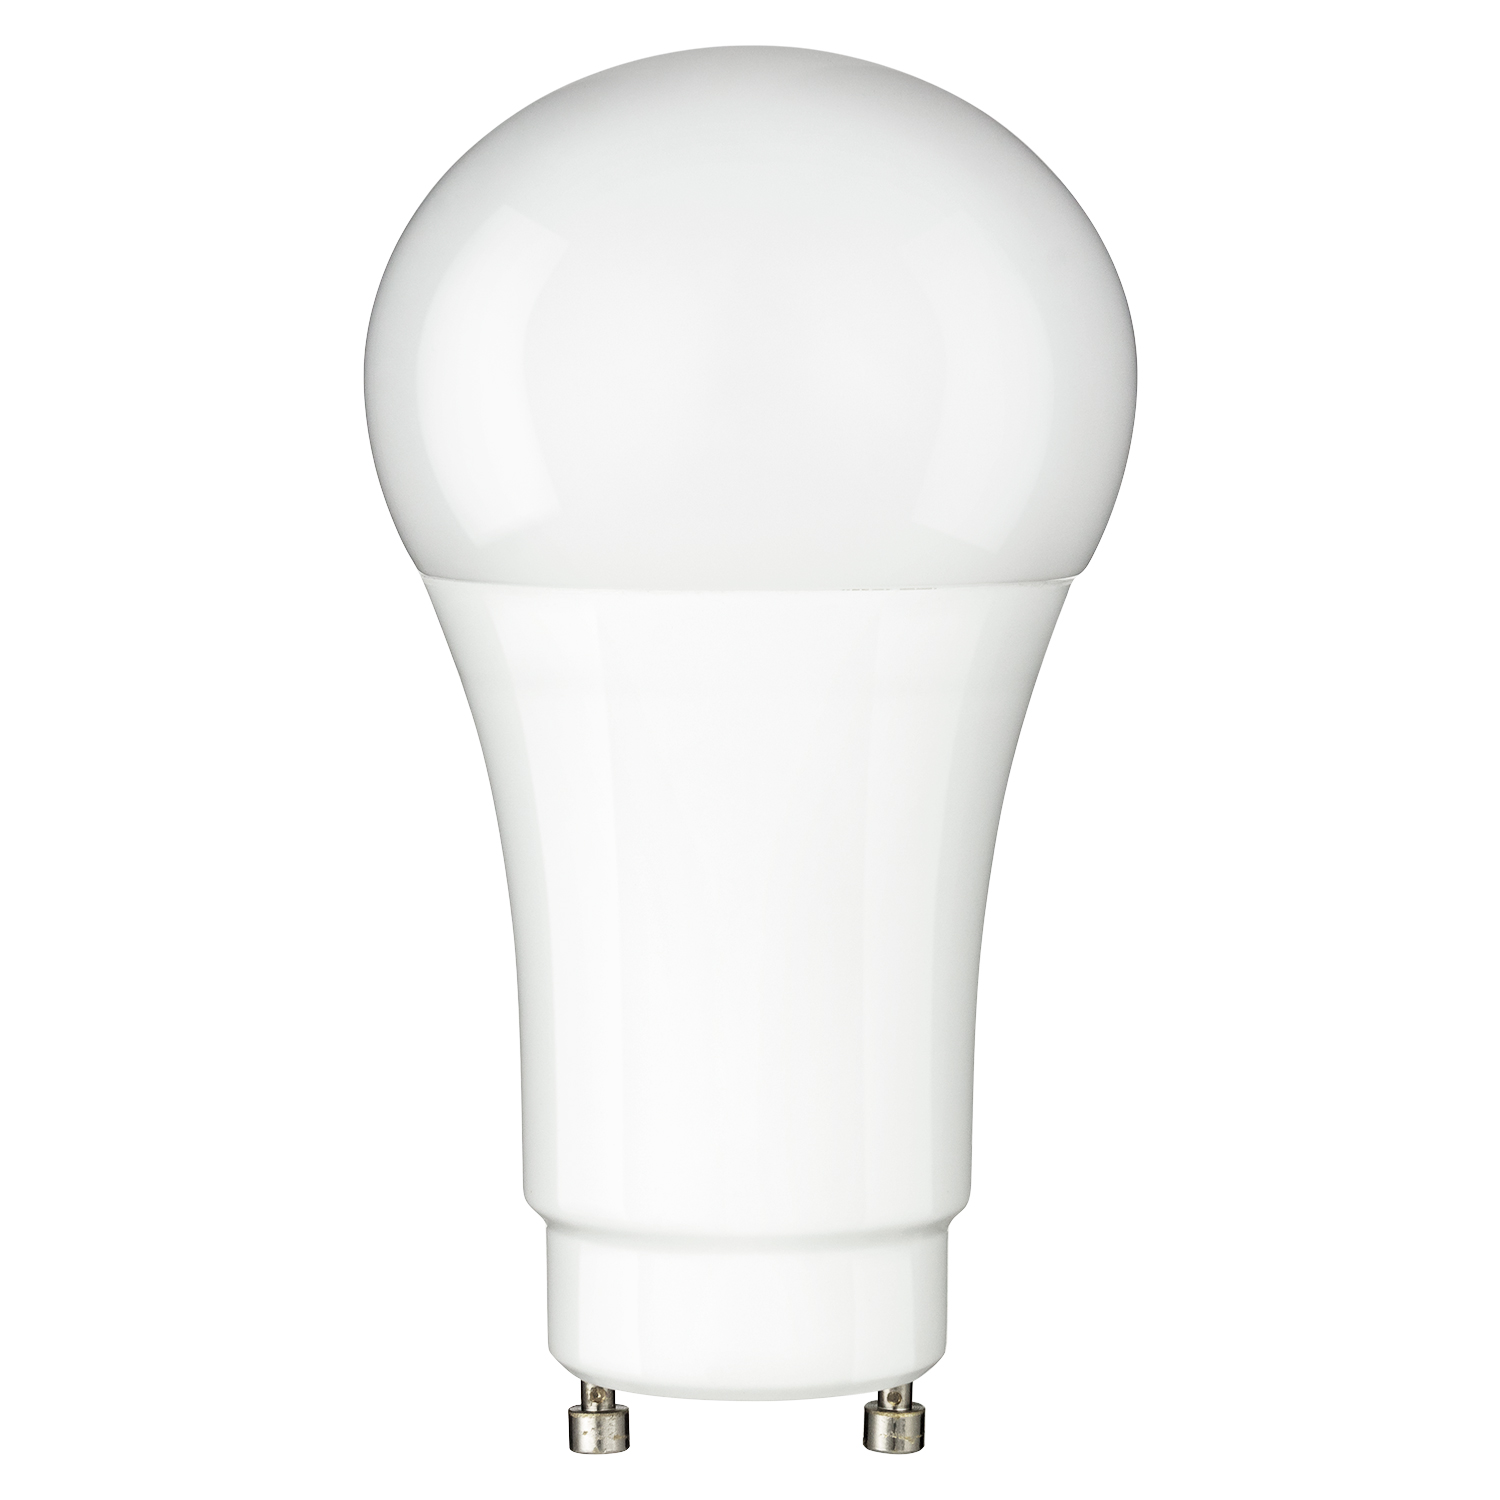 Light Bulb LED GU24 Twist n Lock Base Dimmable UL Listed 4000K